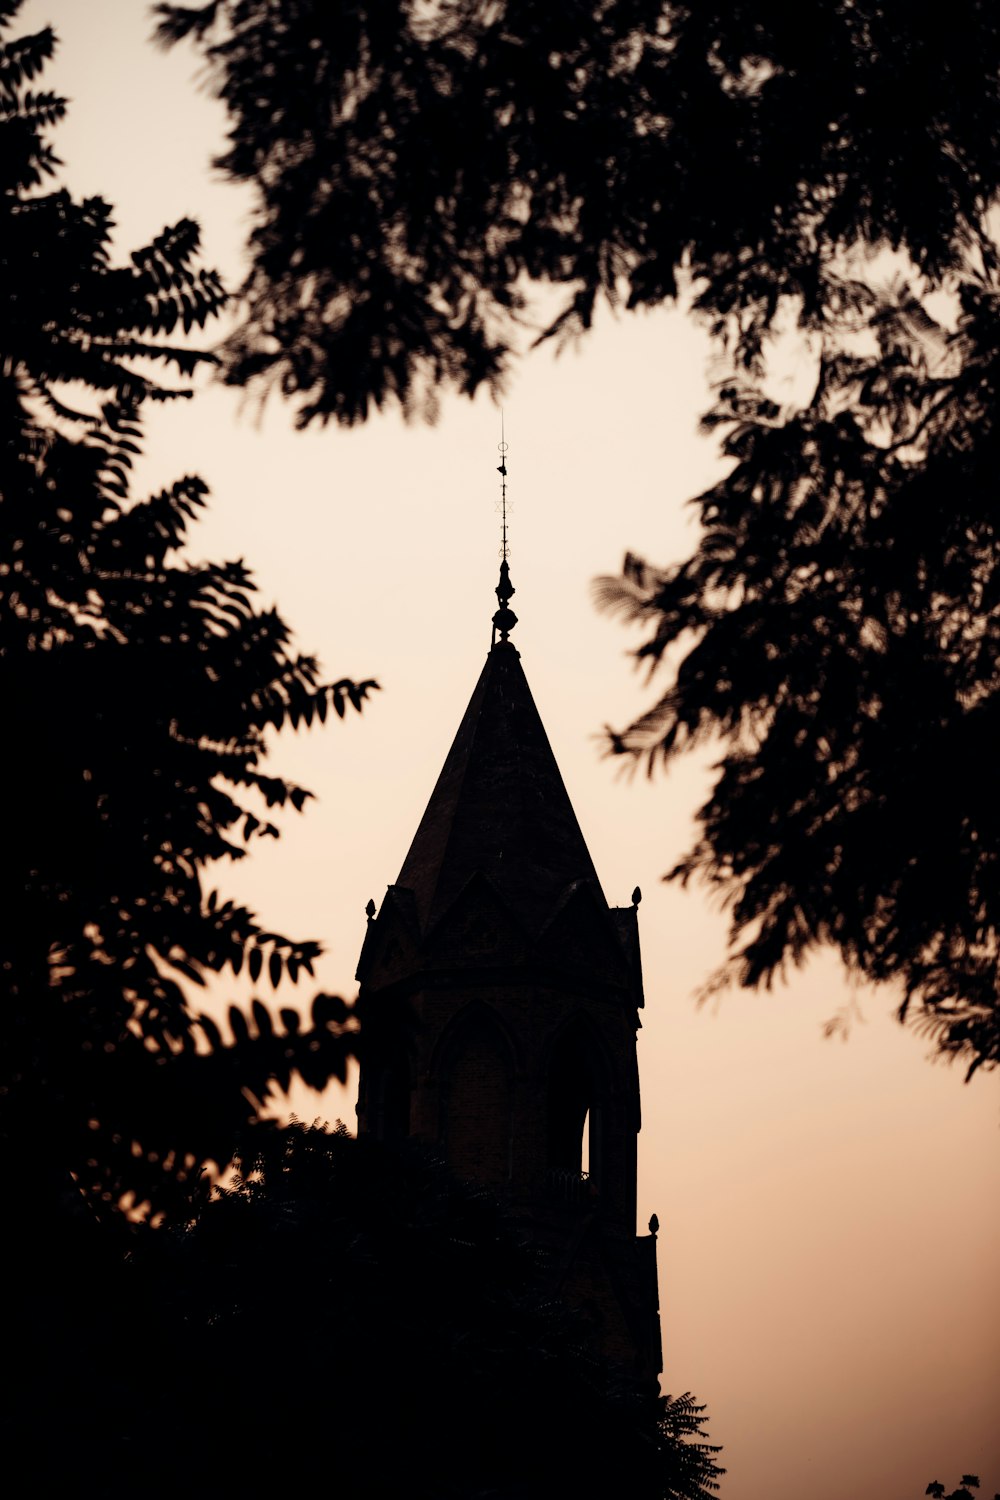 a church steeple is seen through the trees